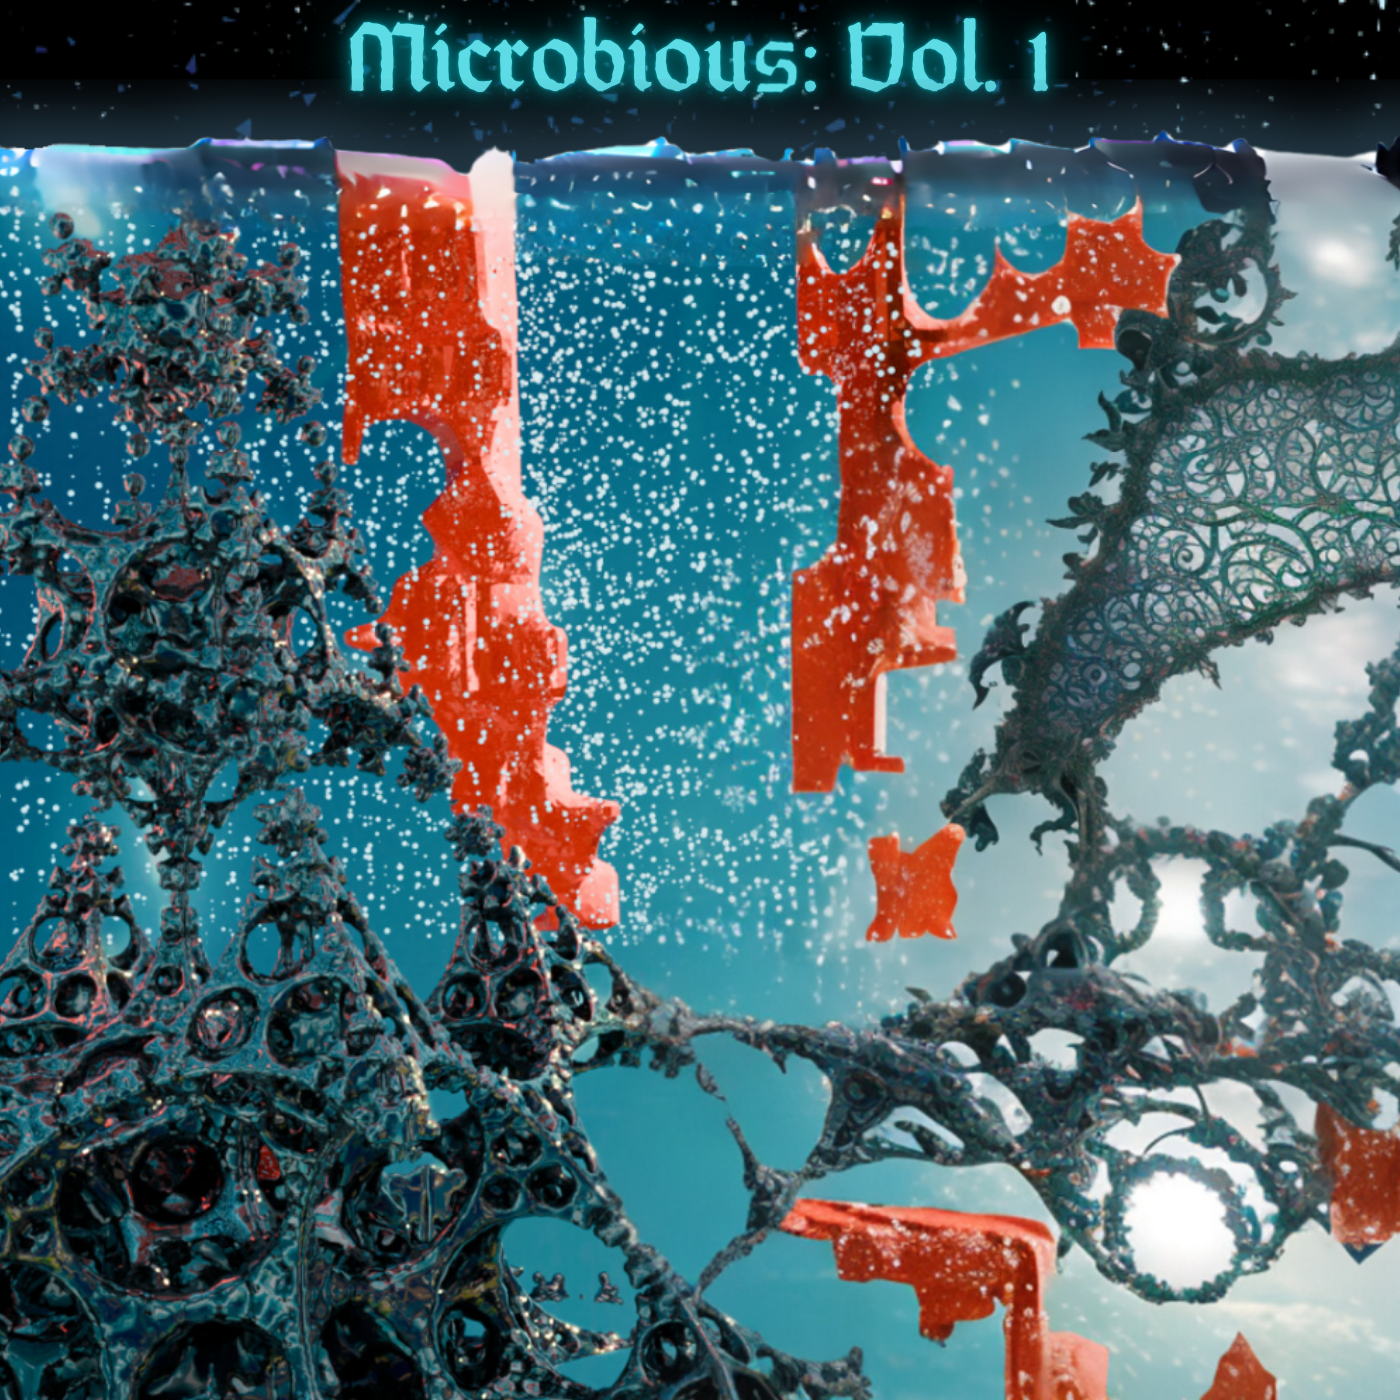 Sample Pack (Microbious Vol. 1)